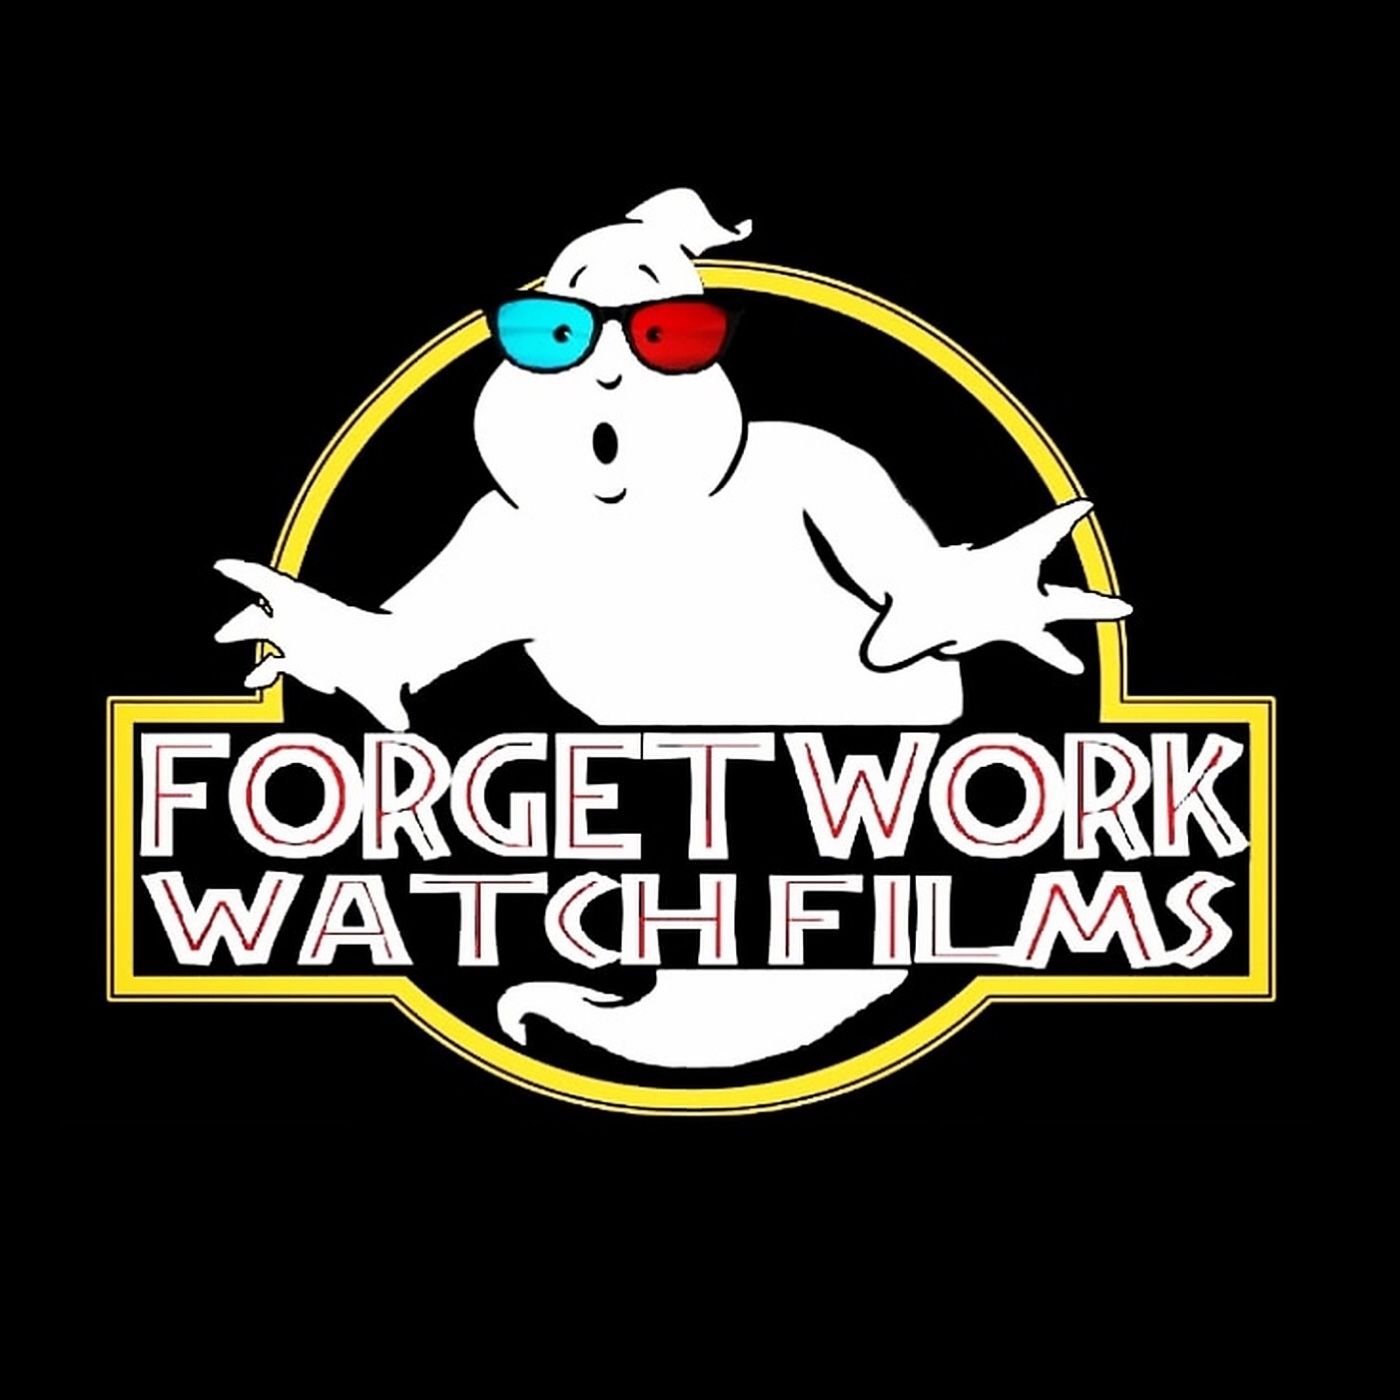 Forget Work, Watch Films!